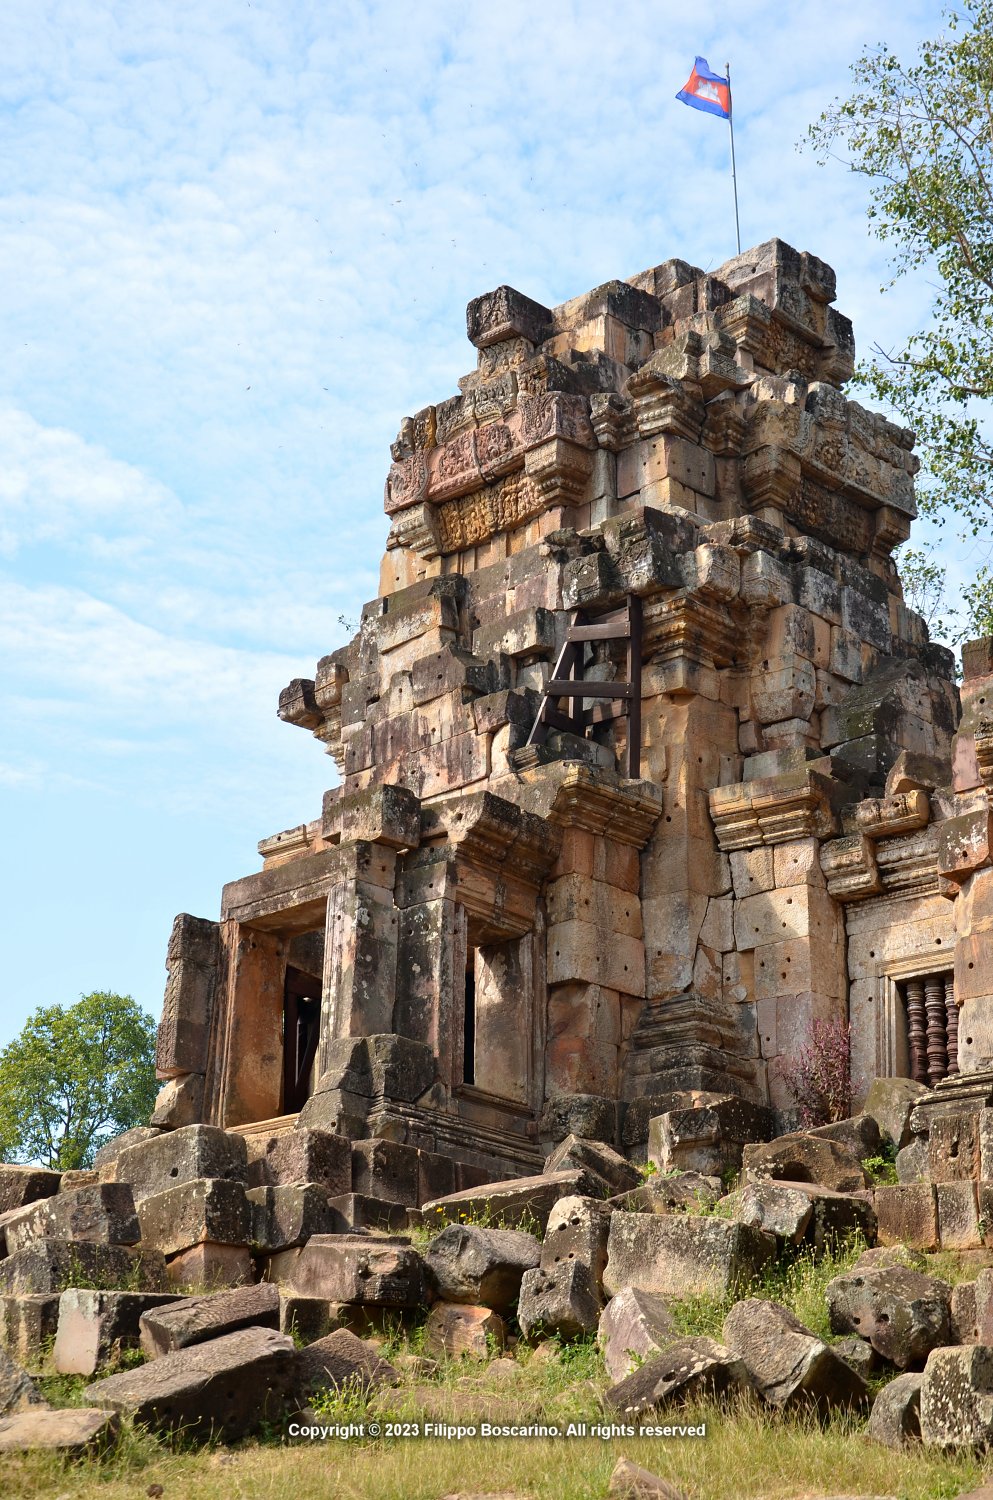 2016-12-29-battambang-2408-monuments